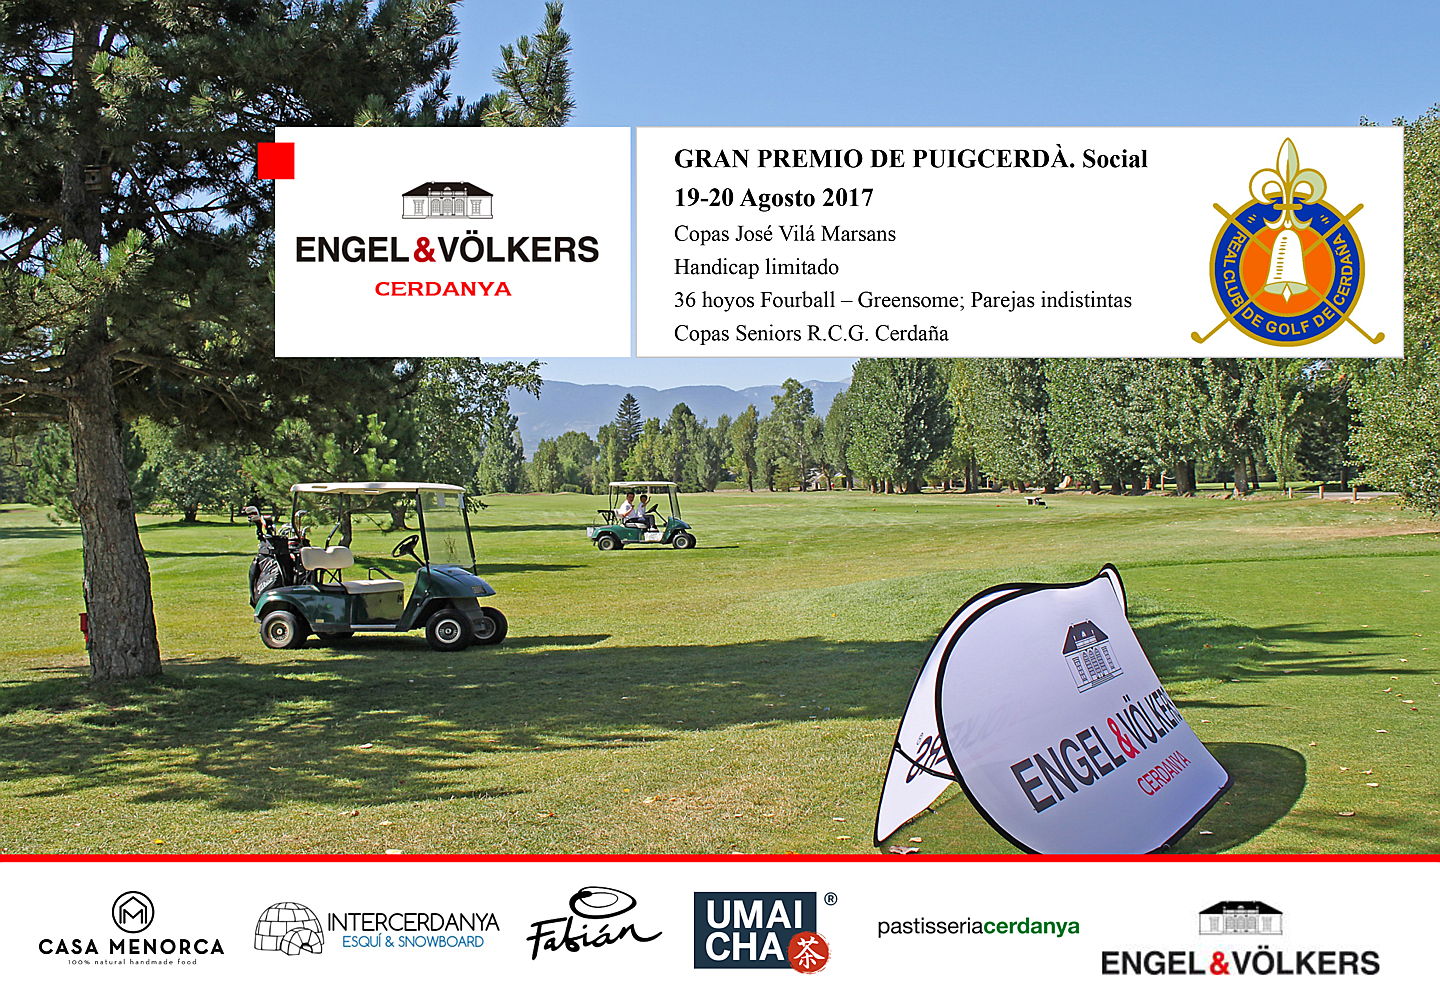  Puigcerdà
- Gran Premio Puigcerdà 2017 en el Real Club de Golf Cerdaña